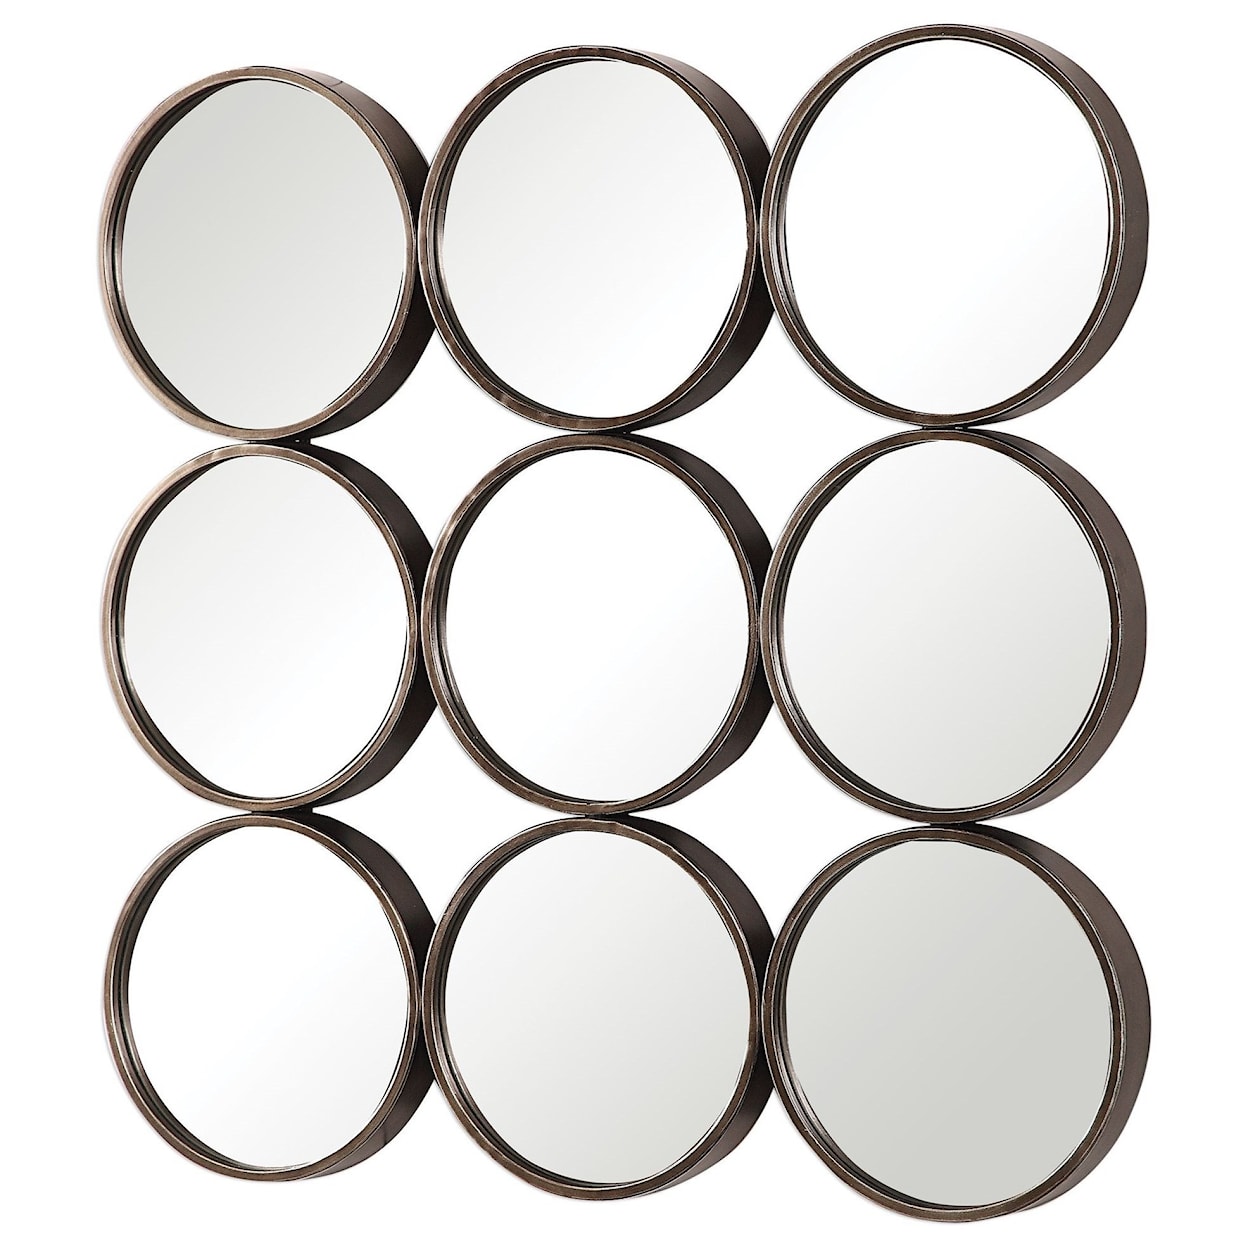 Uttermost Mirrors - Round Devet Welded Iron Rings Mirror